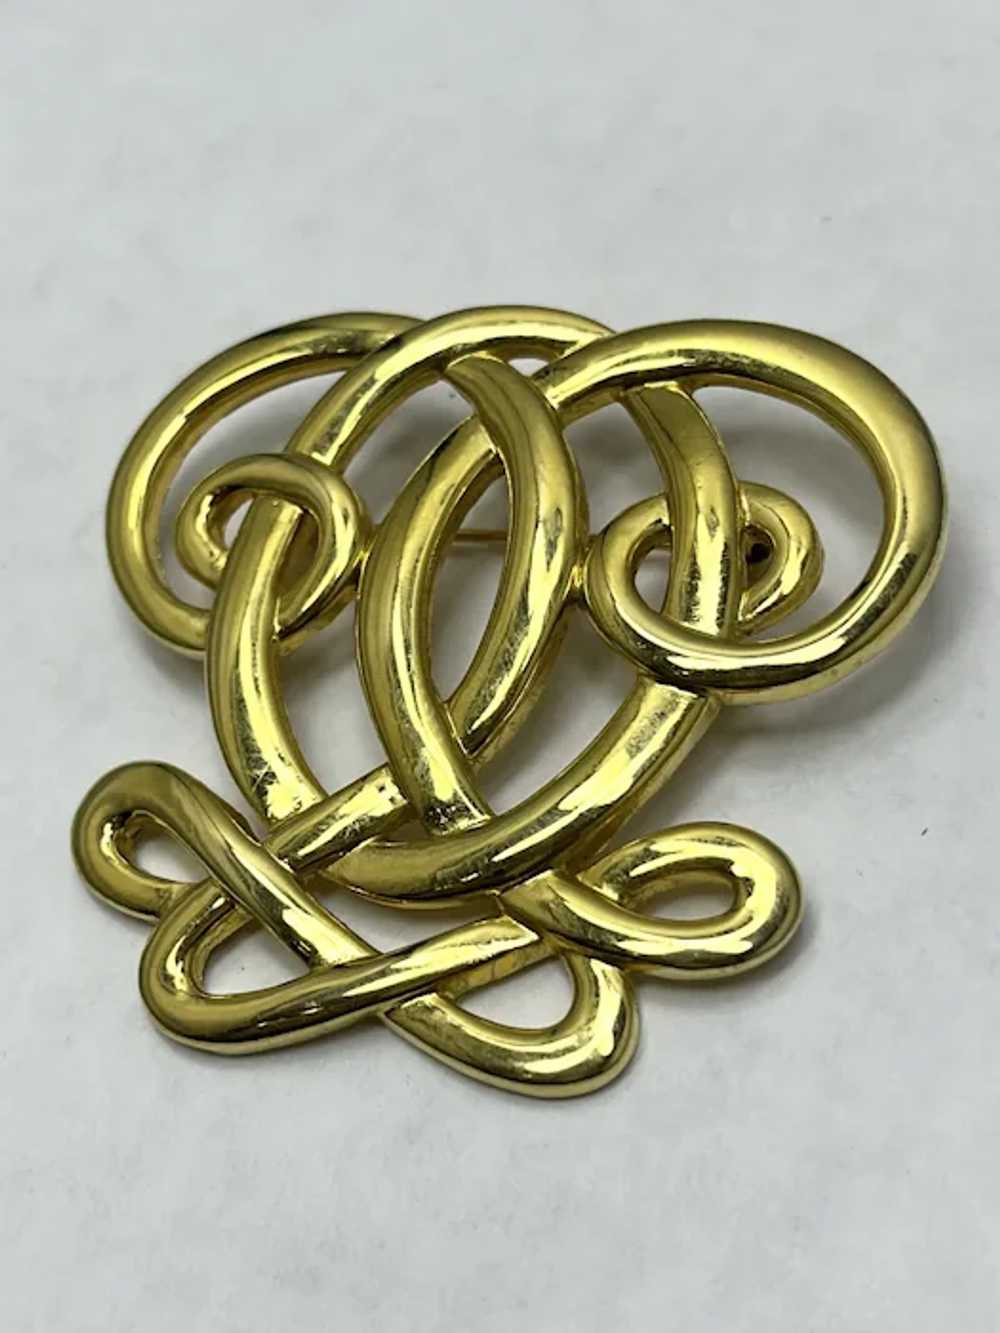 Vintage Gold Swirl Brooch Pin - image 2